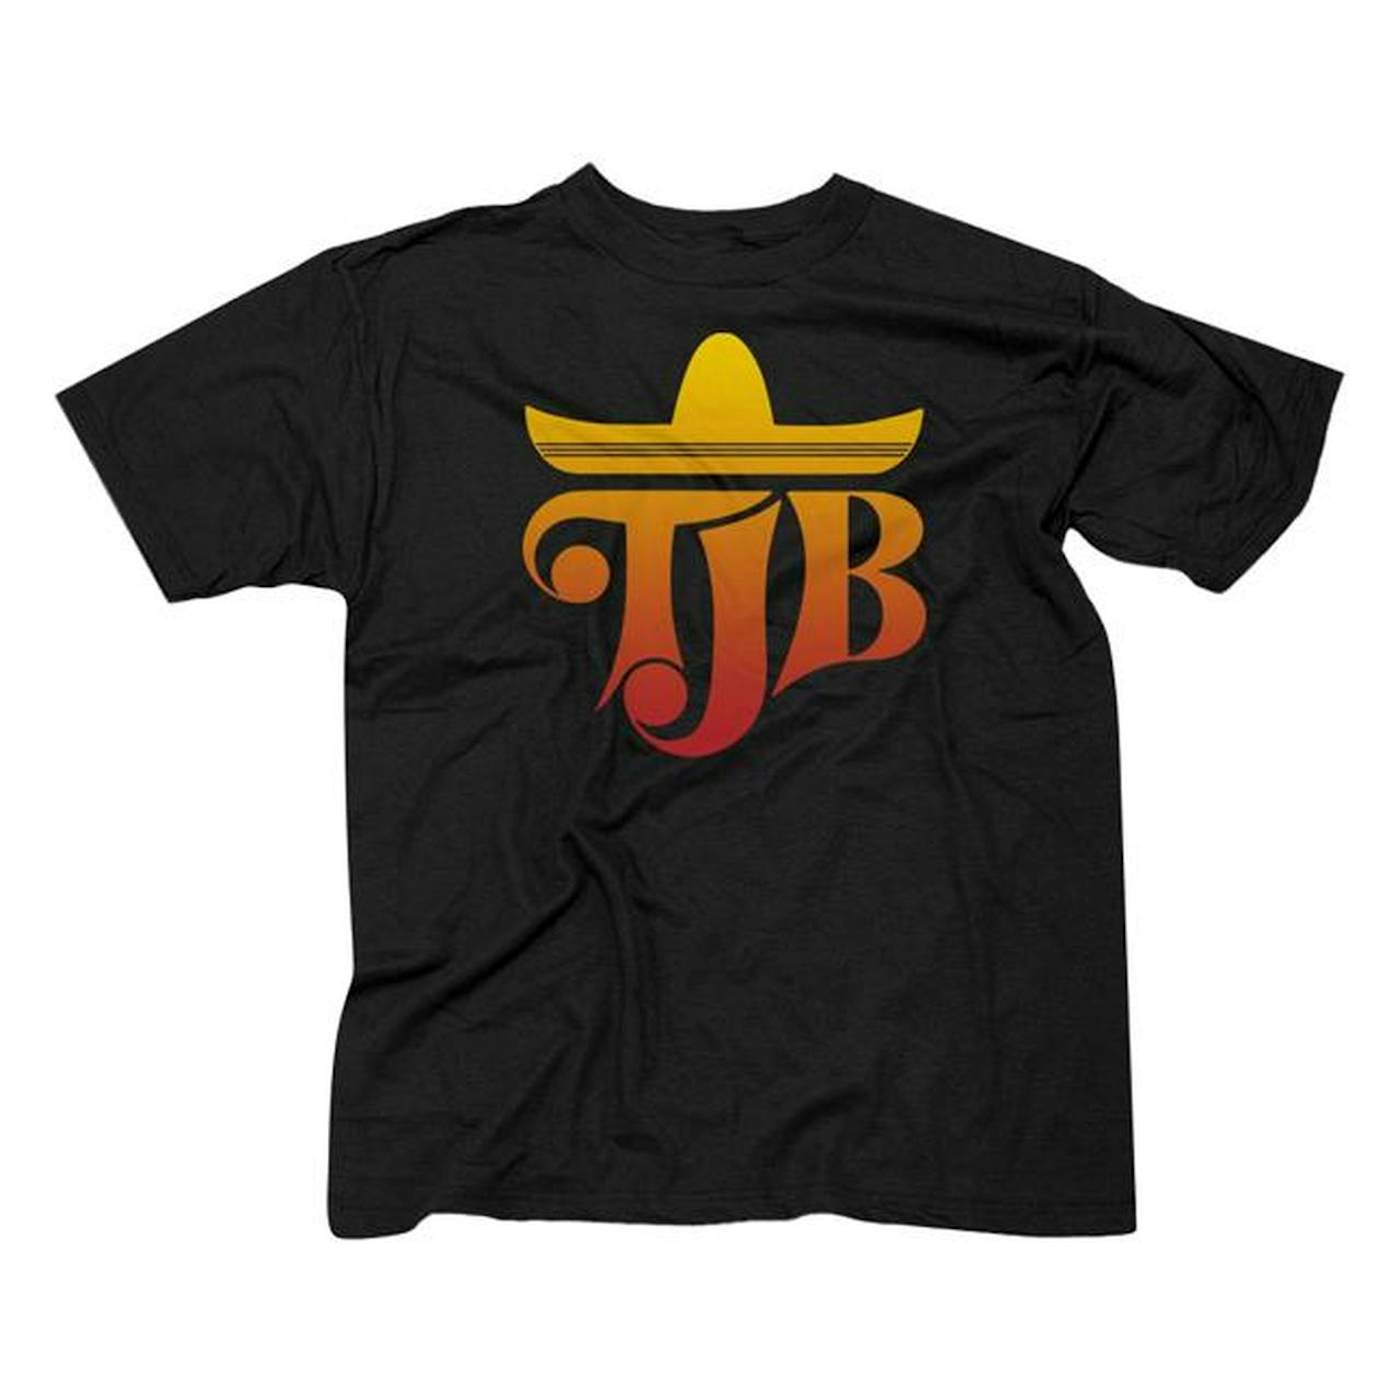 Herb Alpert "Tijuana Brass" black t-shirt